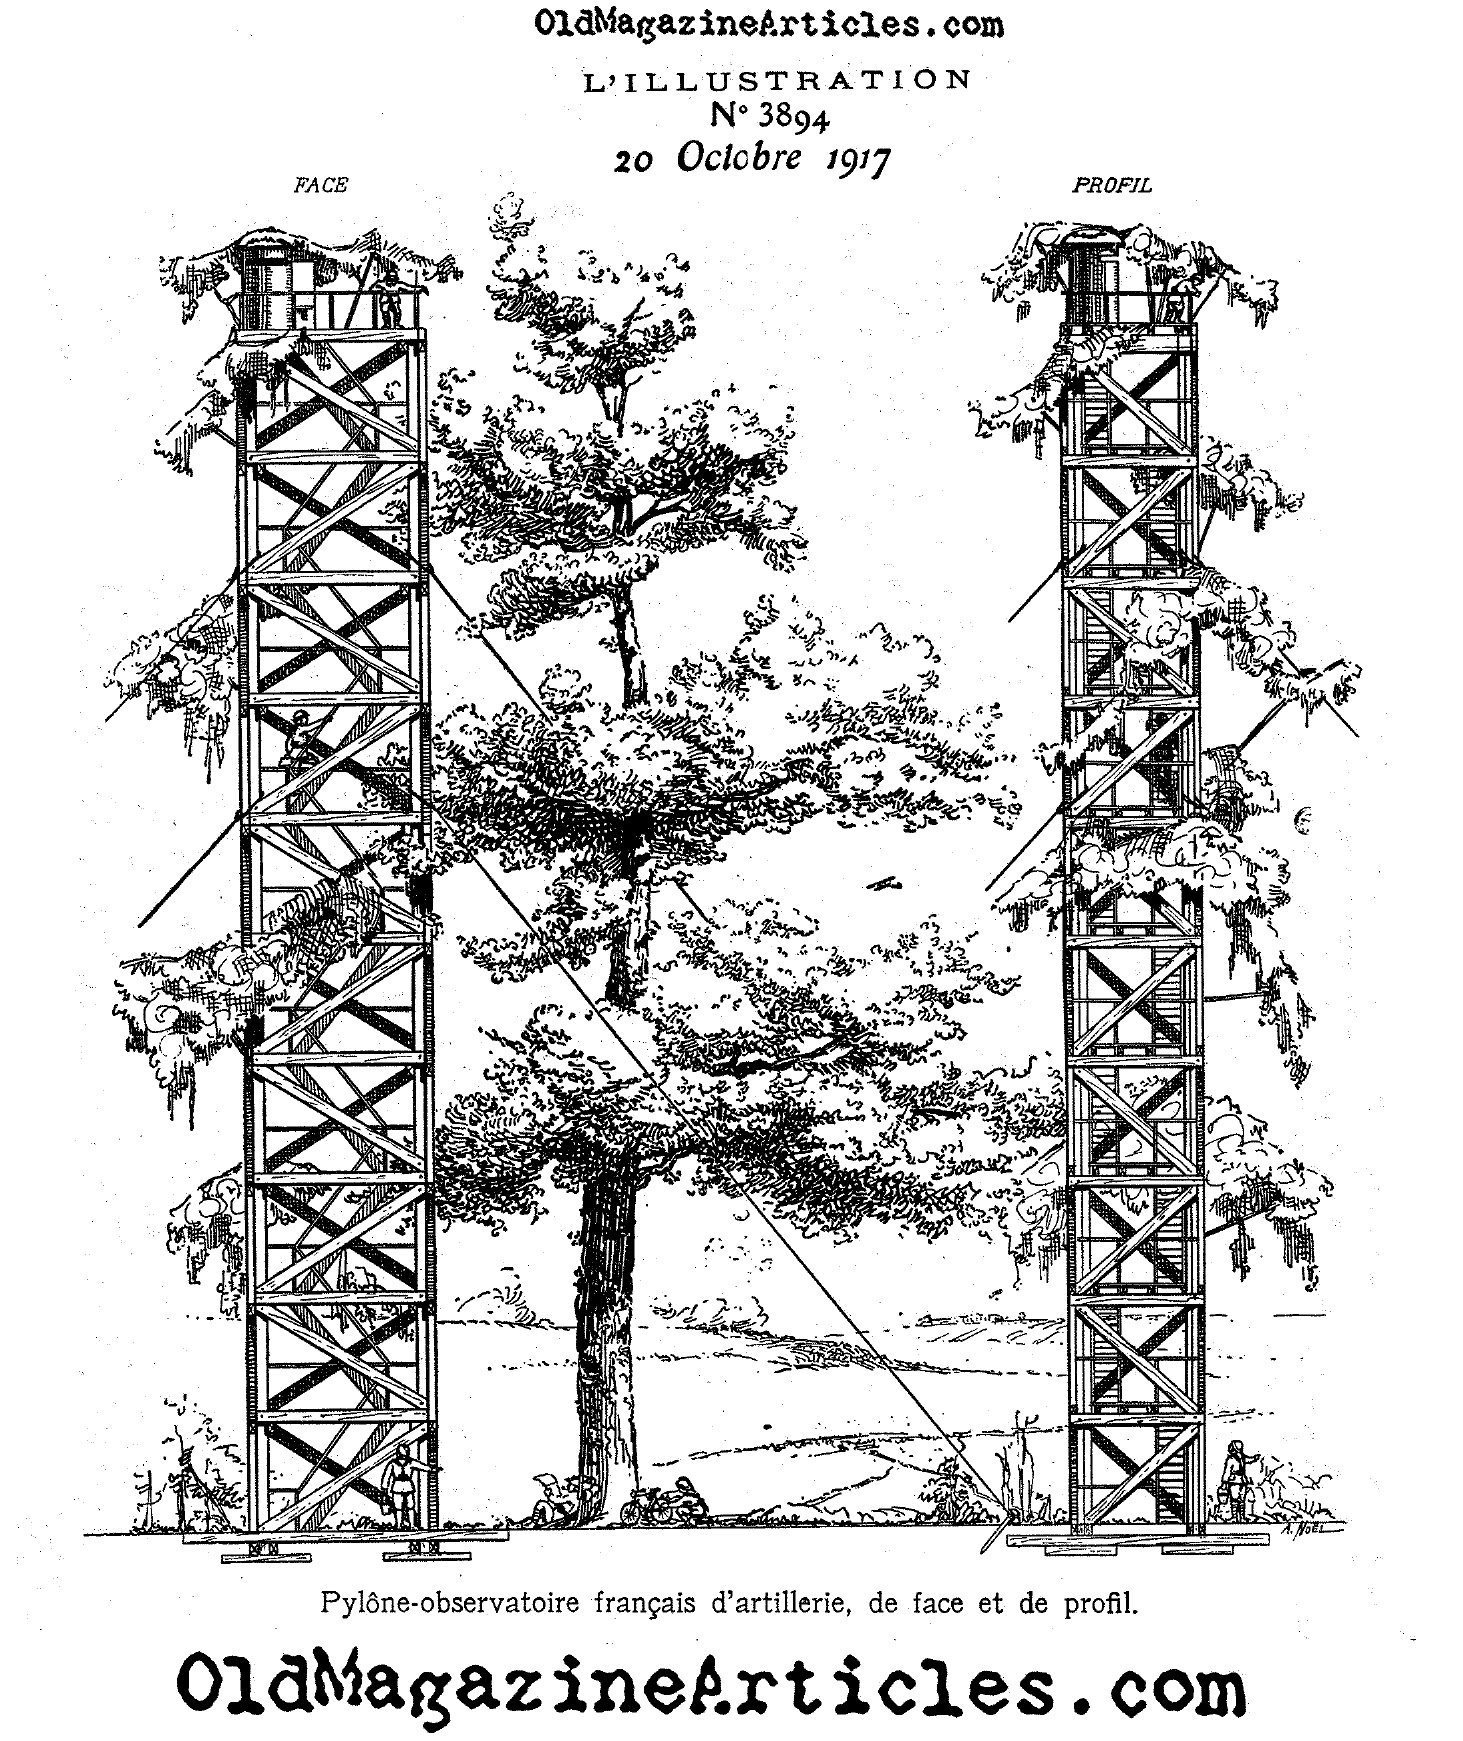 An  Artillery Observation Tower (L'Illustration, 1917)